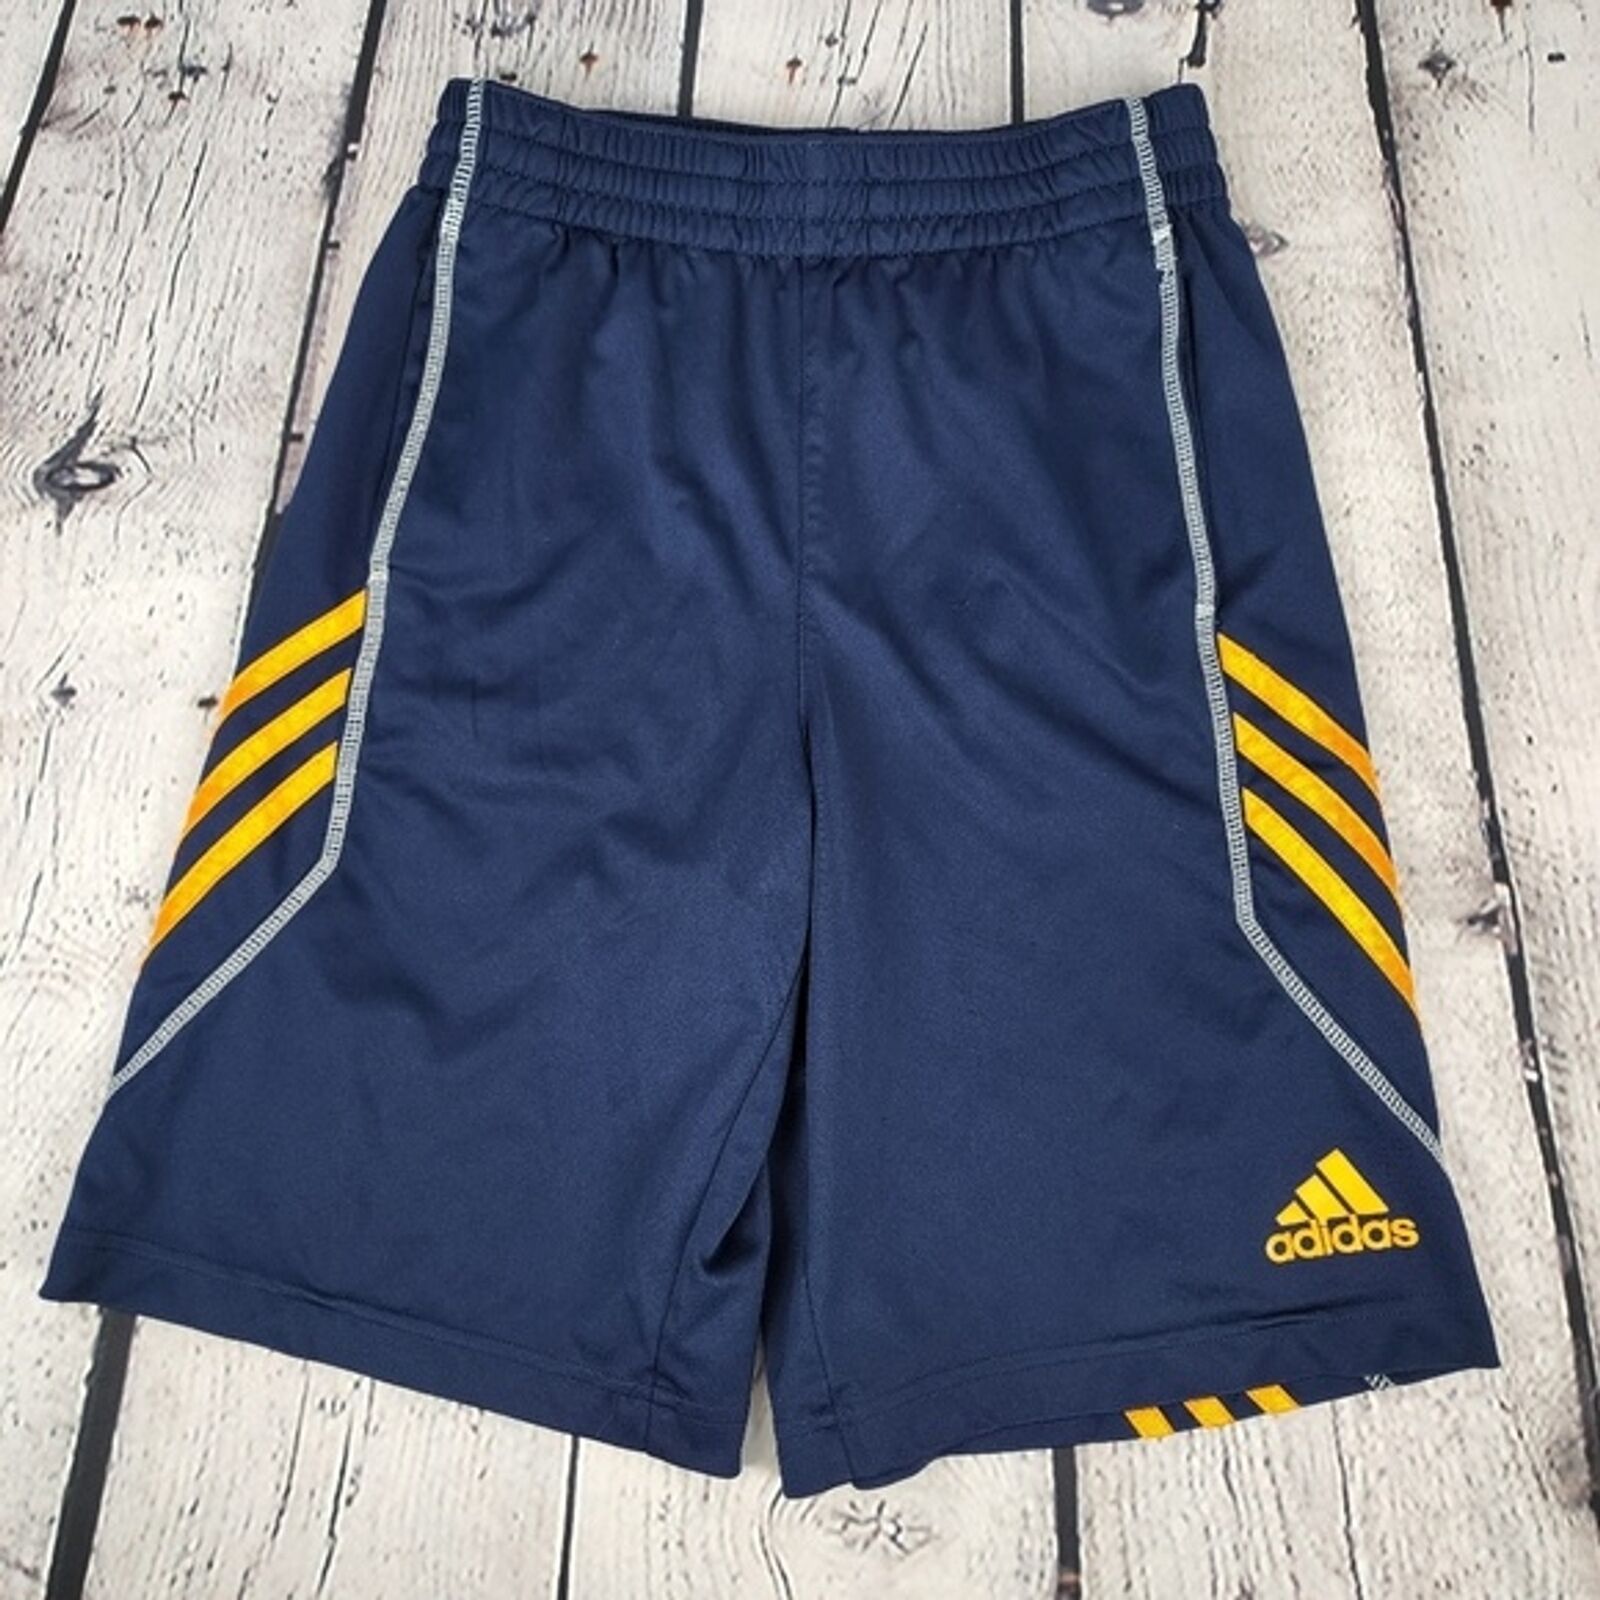 Adidas 3 Striped Athletic Shorts Youth Boys Size Medium 10/12